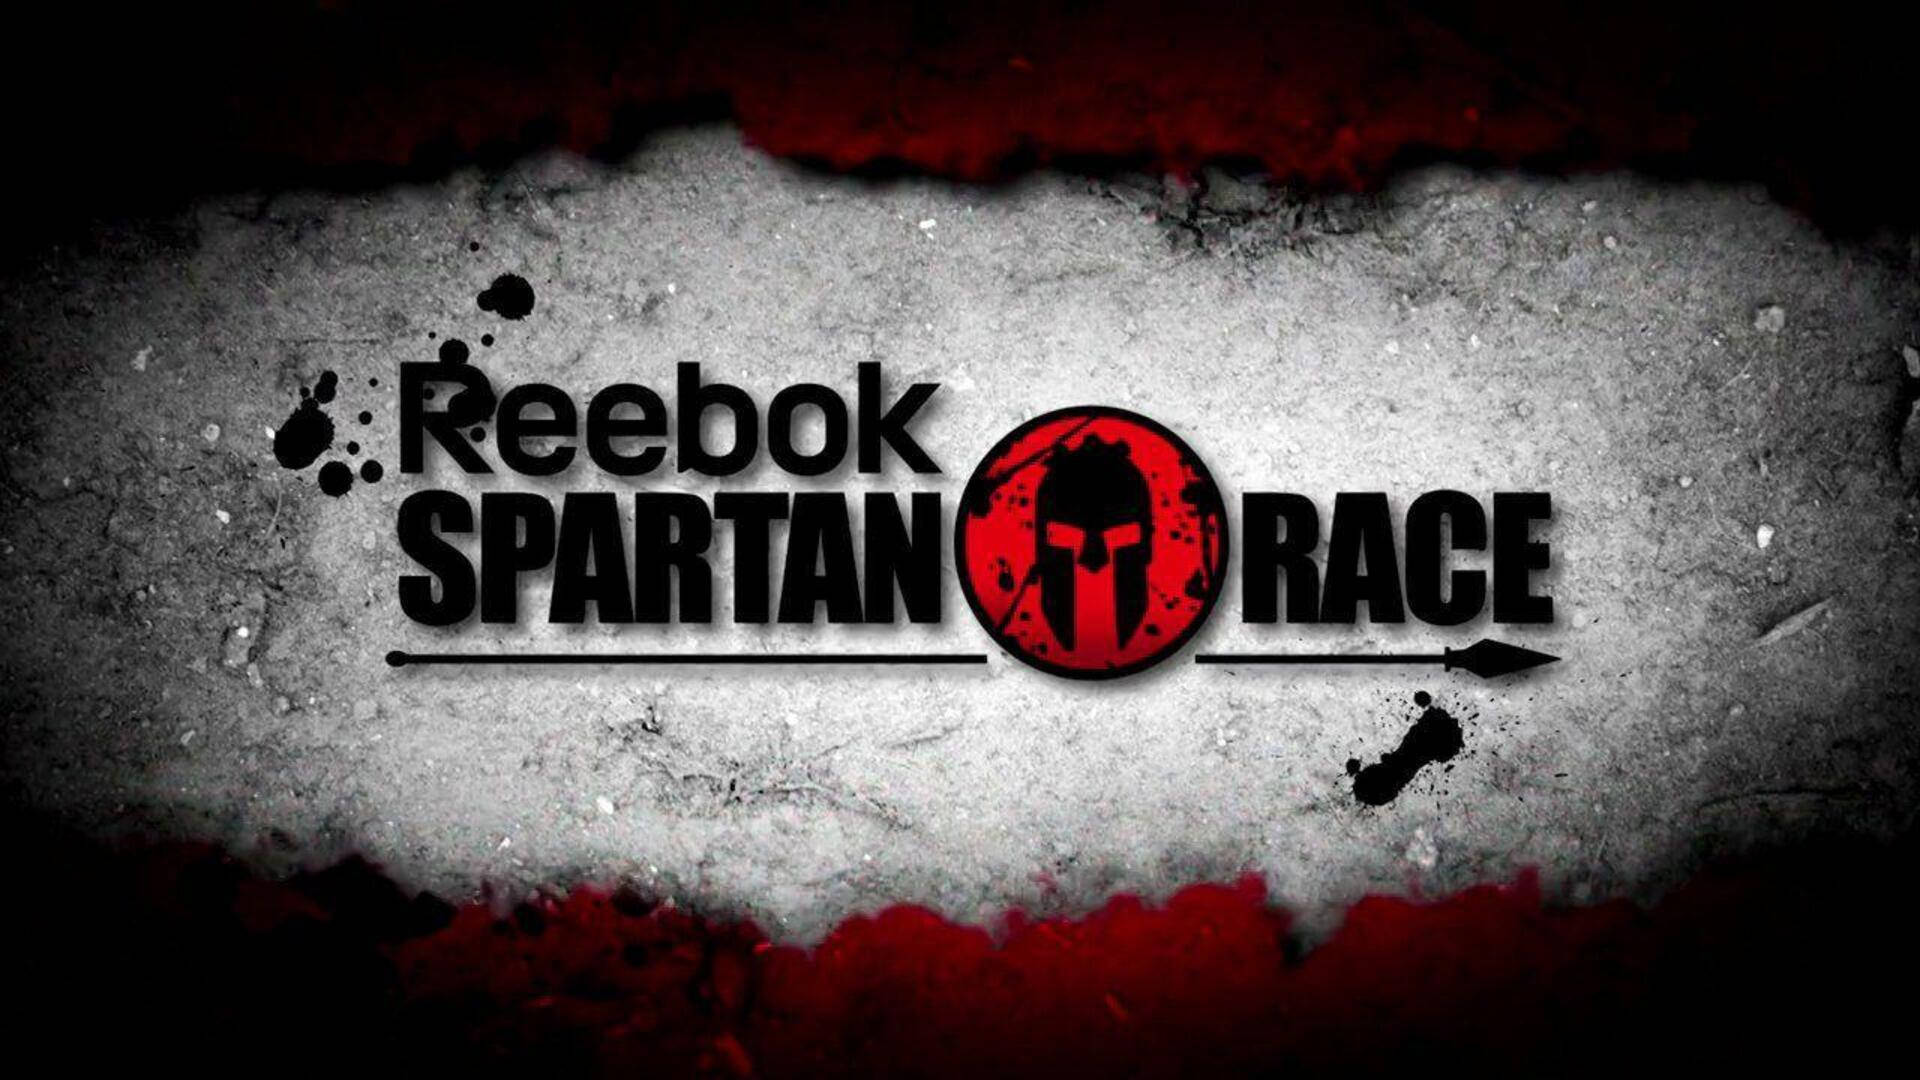 Reebok Spartan Race Design Background